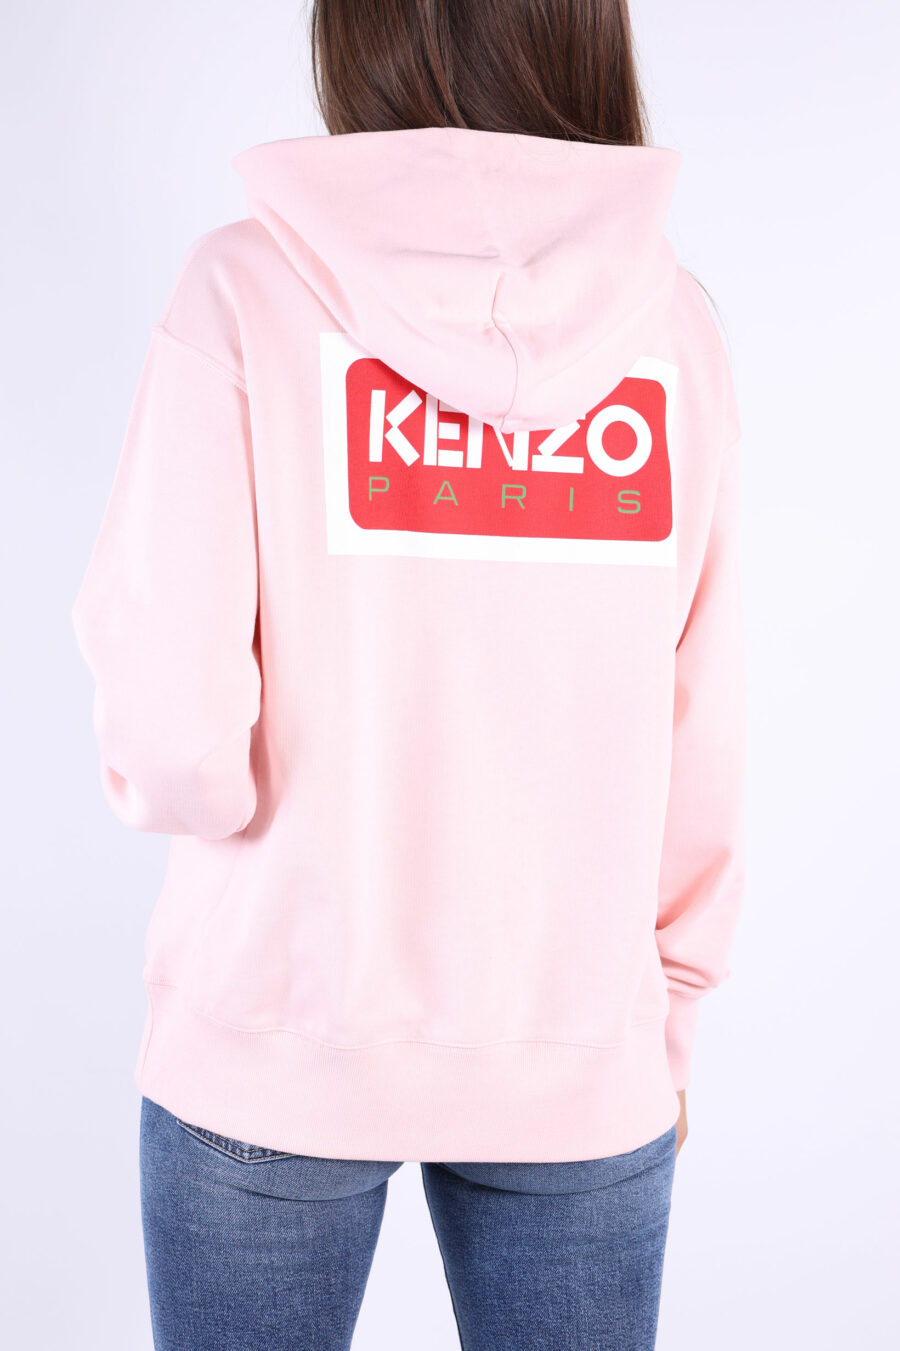 Rosa Kapuzensweatshirt in Übergröße mit "kenzo paris" Logo - 361223054662202077